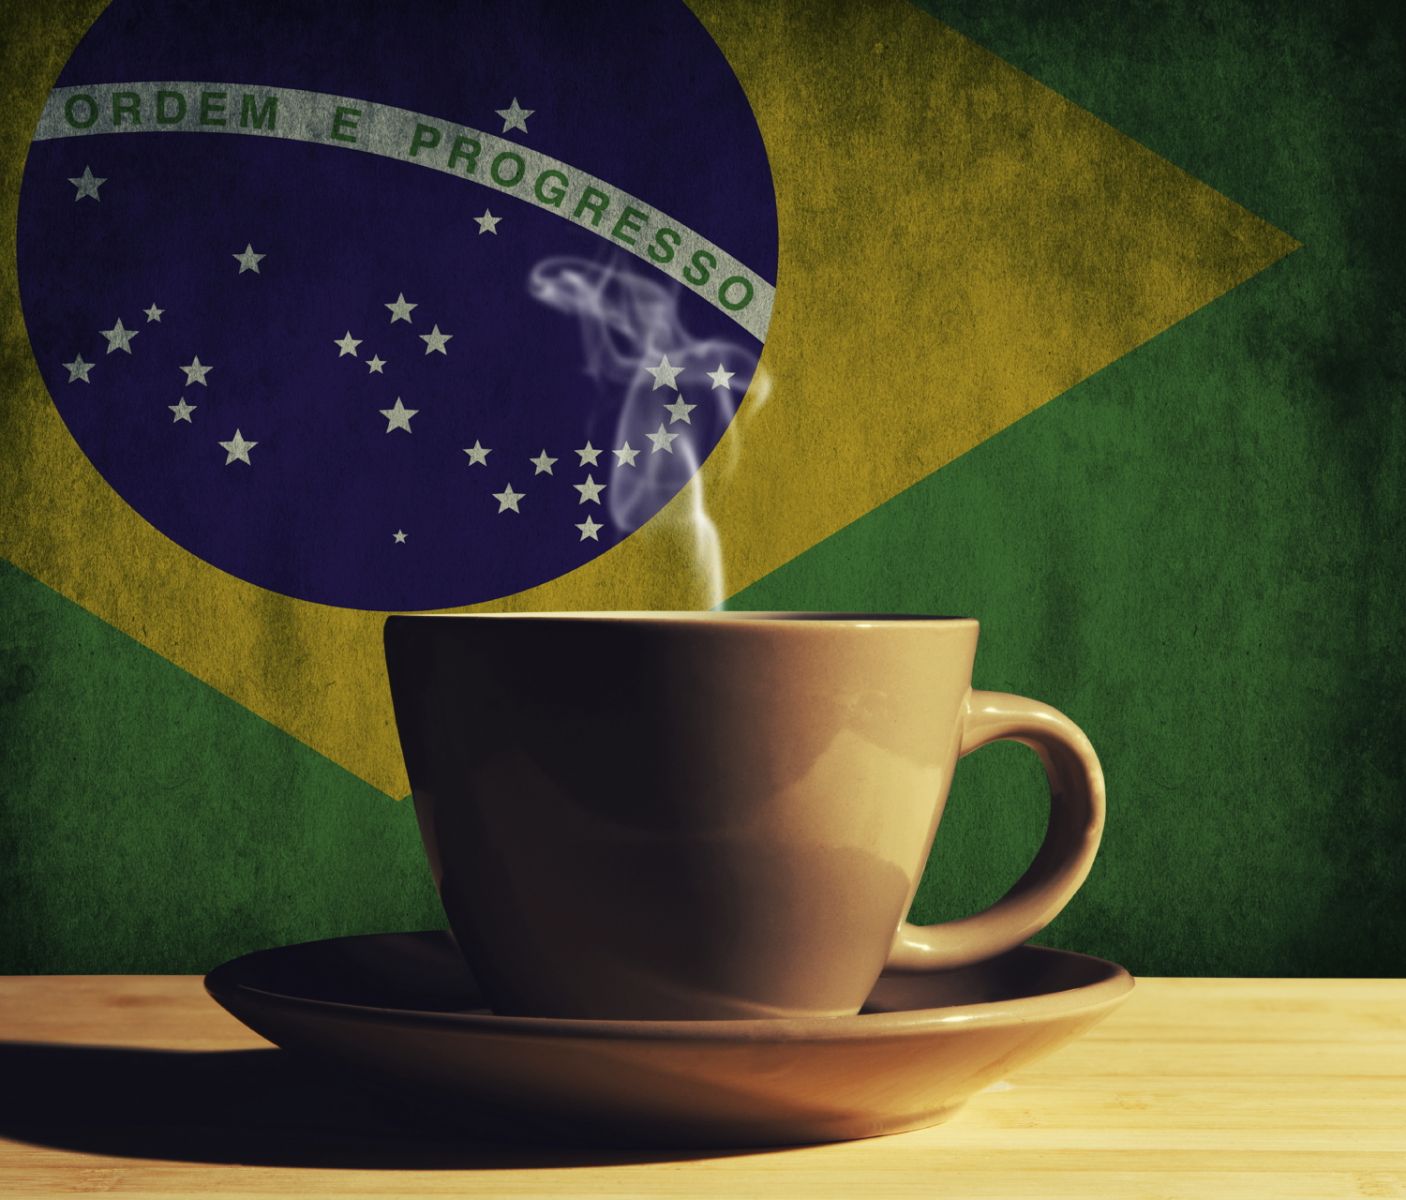 COFFEE CULTURE AROUND THE WORLD: BRAZIL